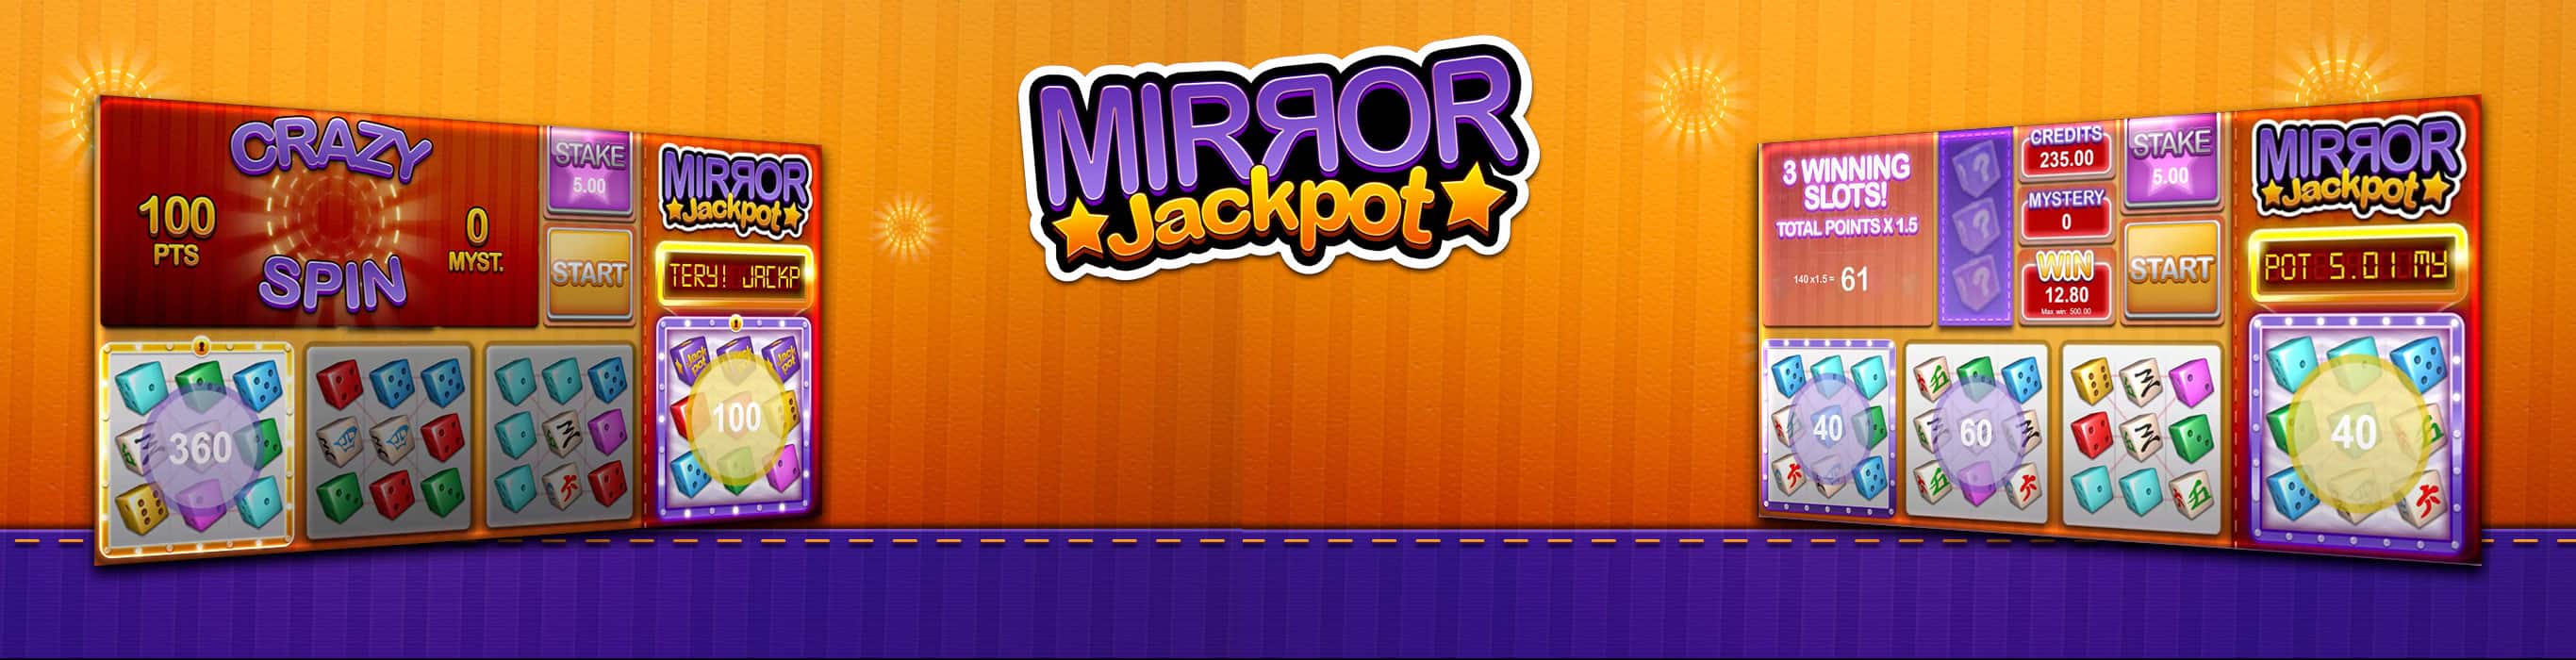 mirrorjackpot-banner-pg-2732x700